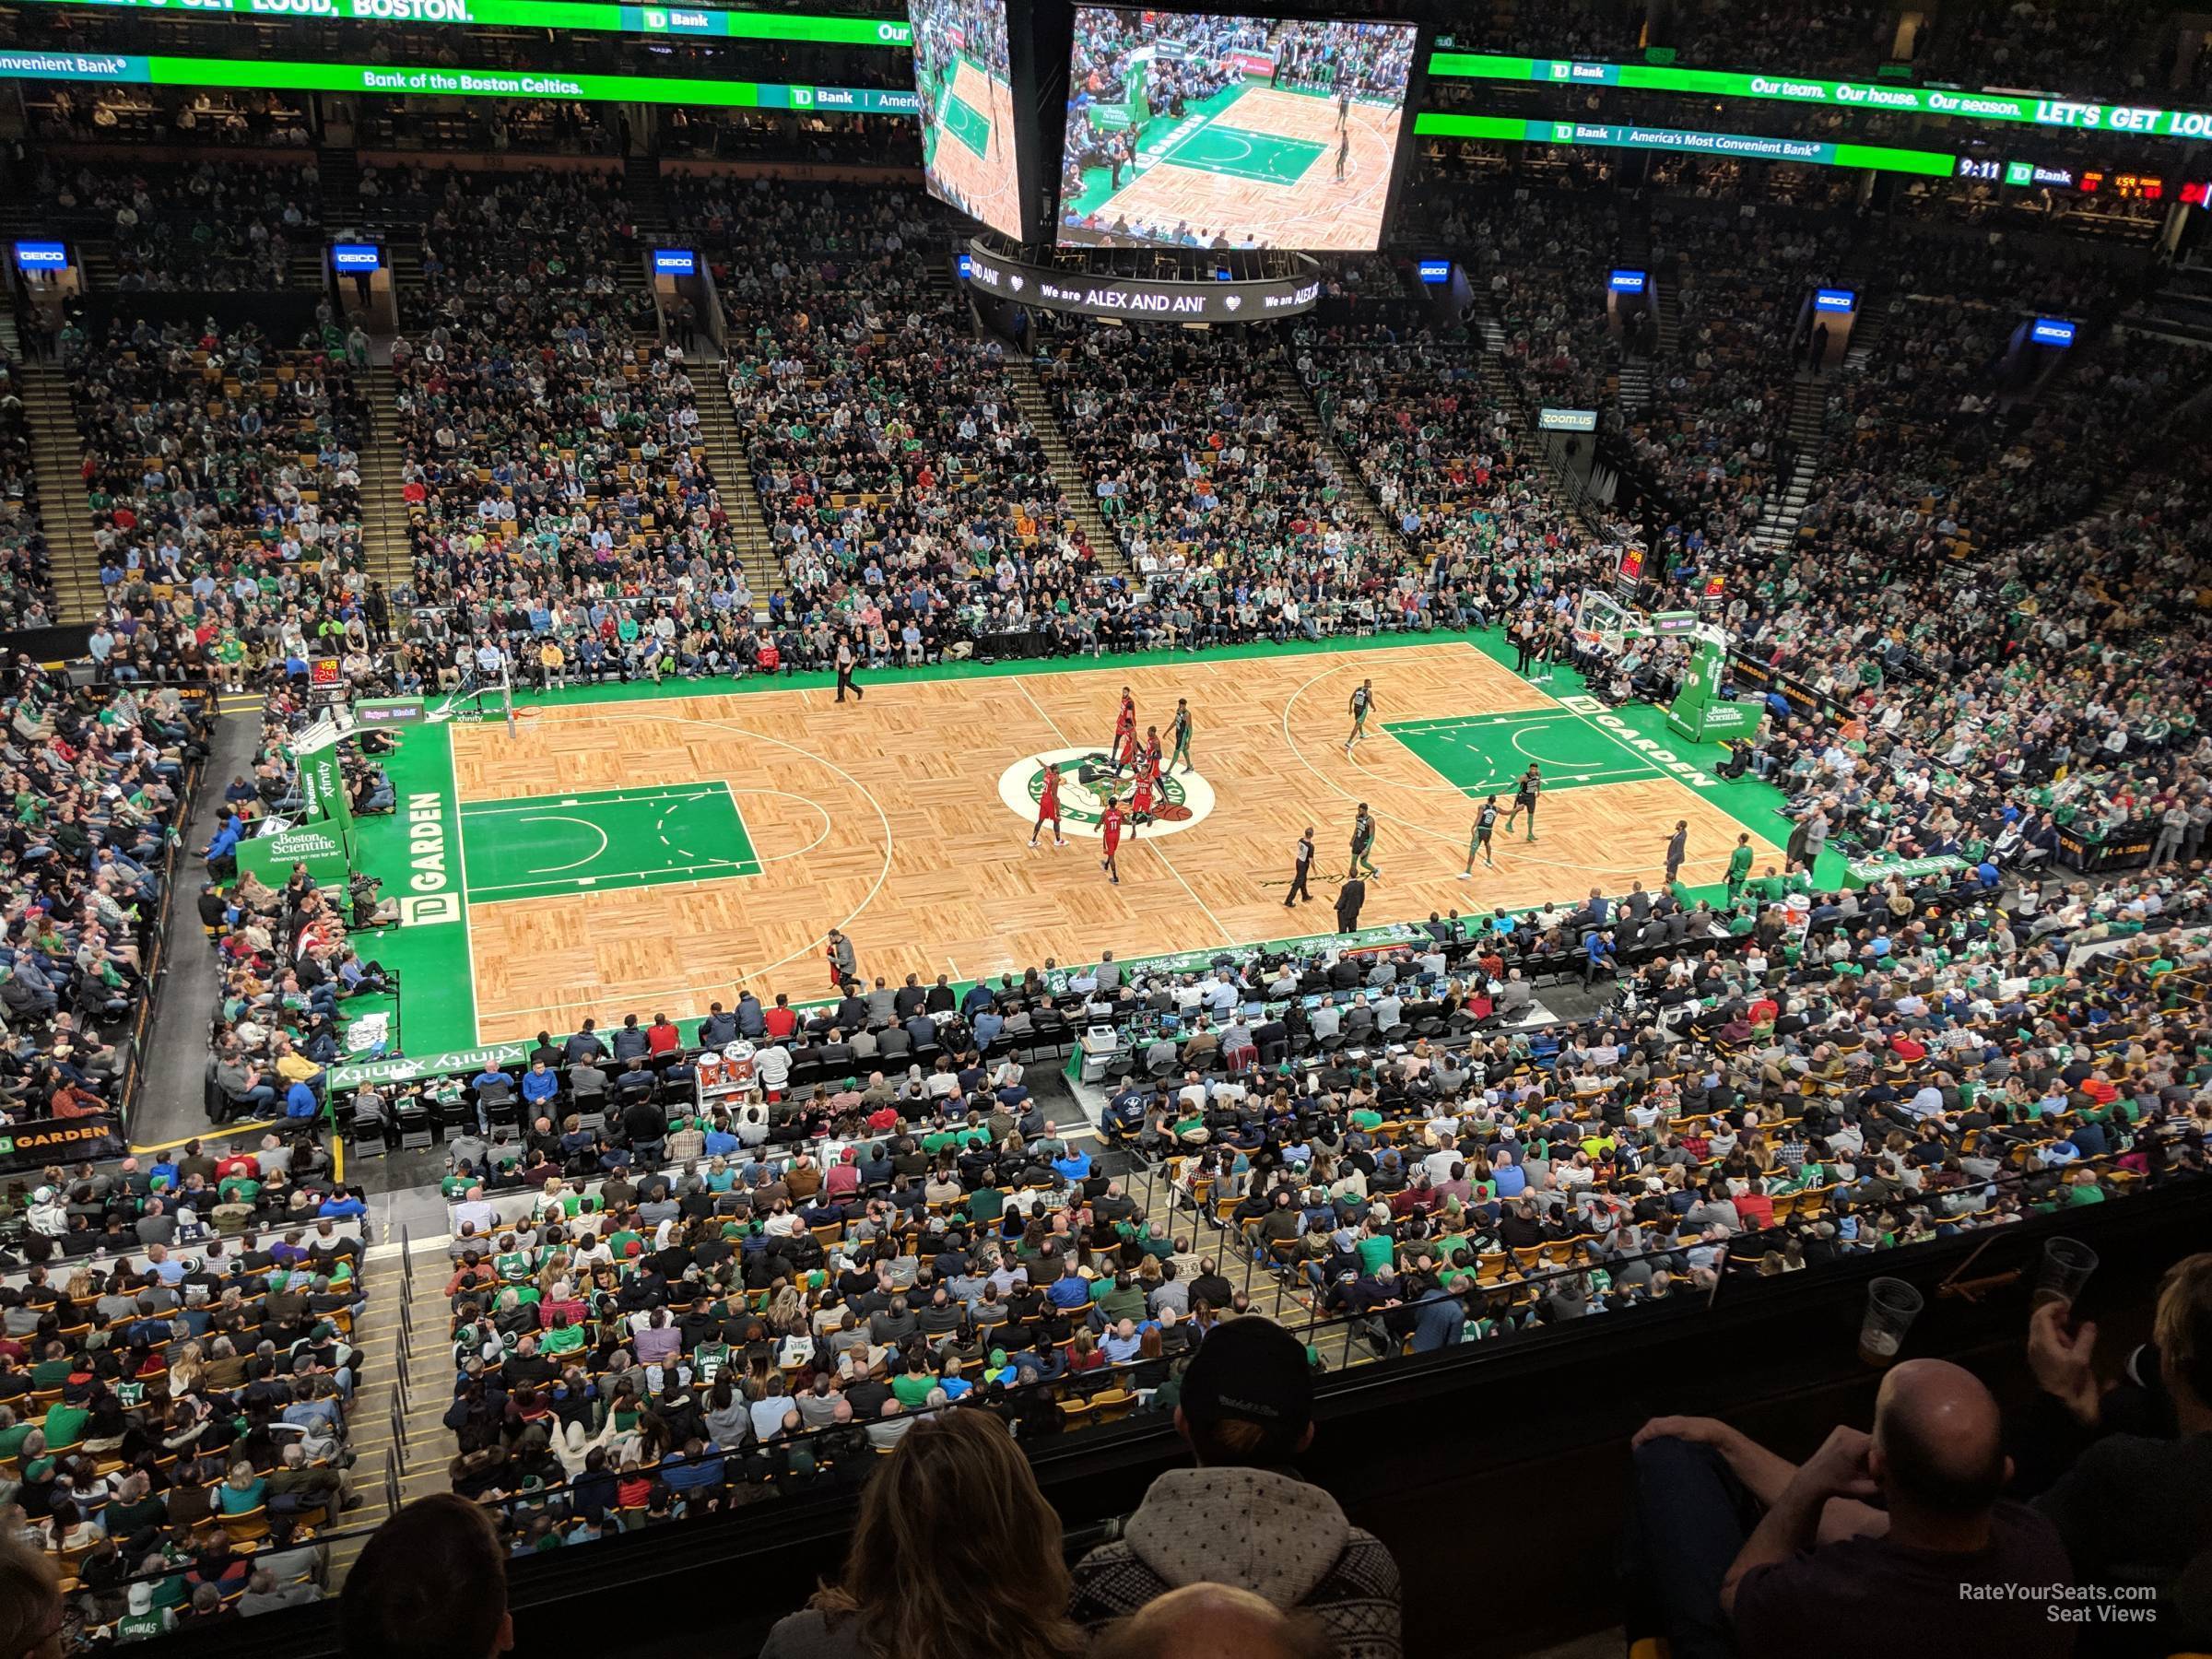 Td Garden Section 302 Boston Celtics Rateyourseats Com